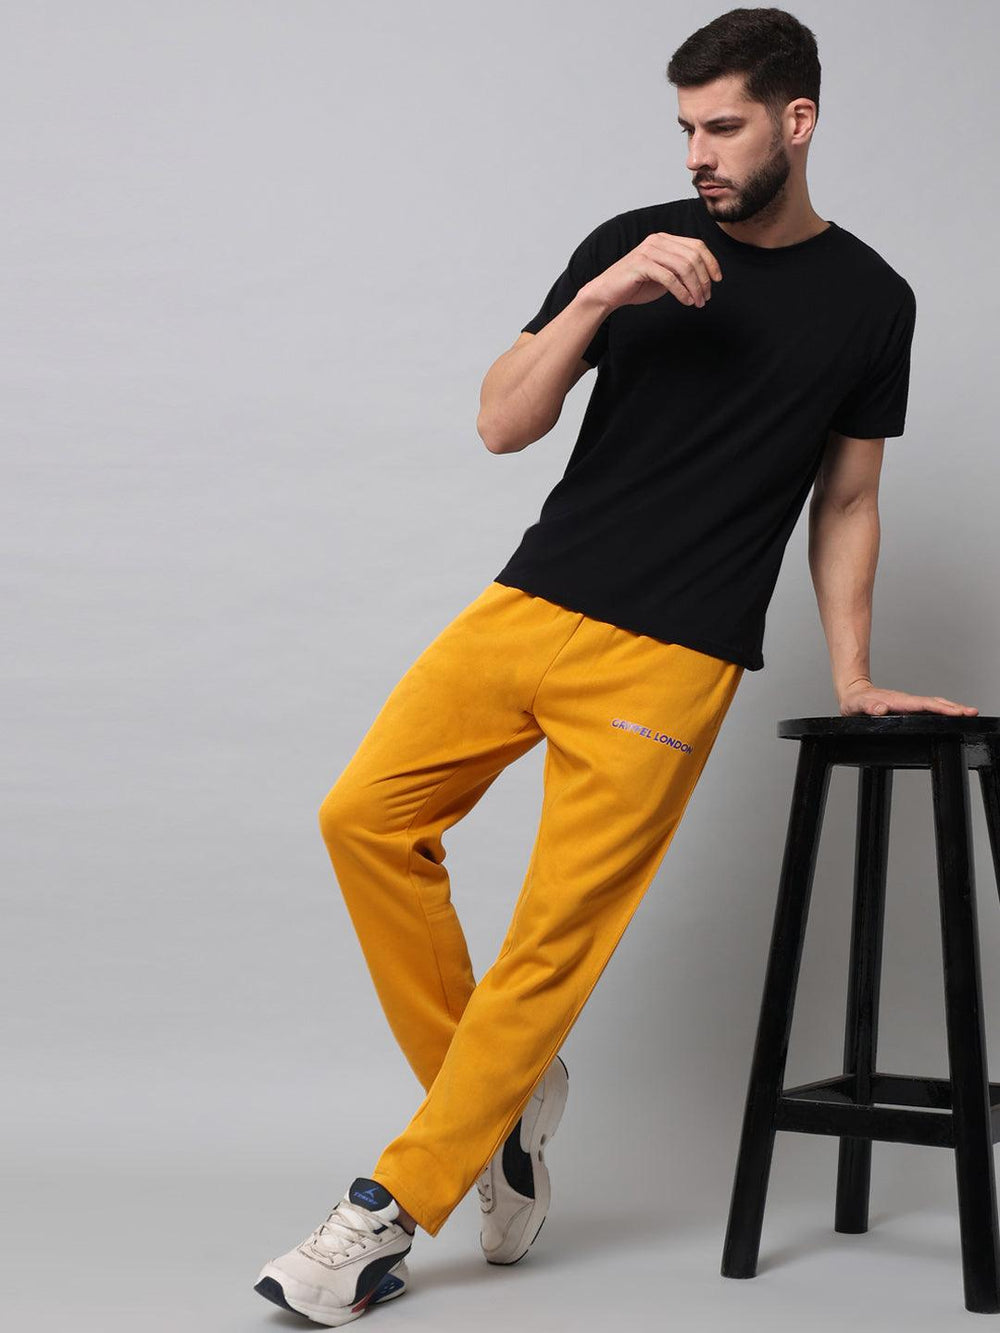 GRIFFEL Men Fleece Basic Solid Front Logo Mustard Trackpants - griffel